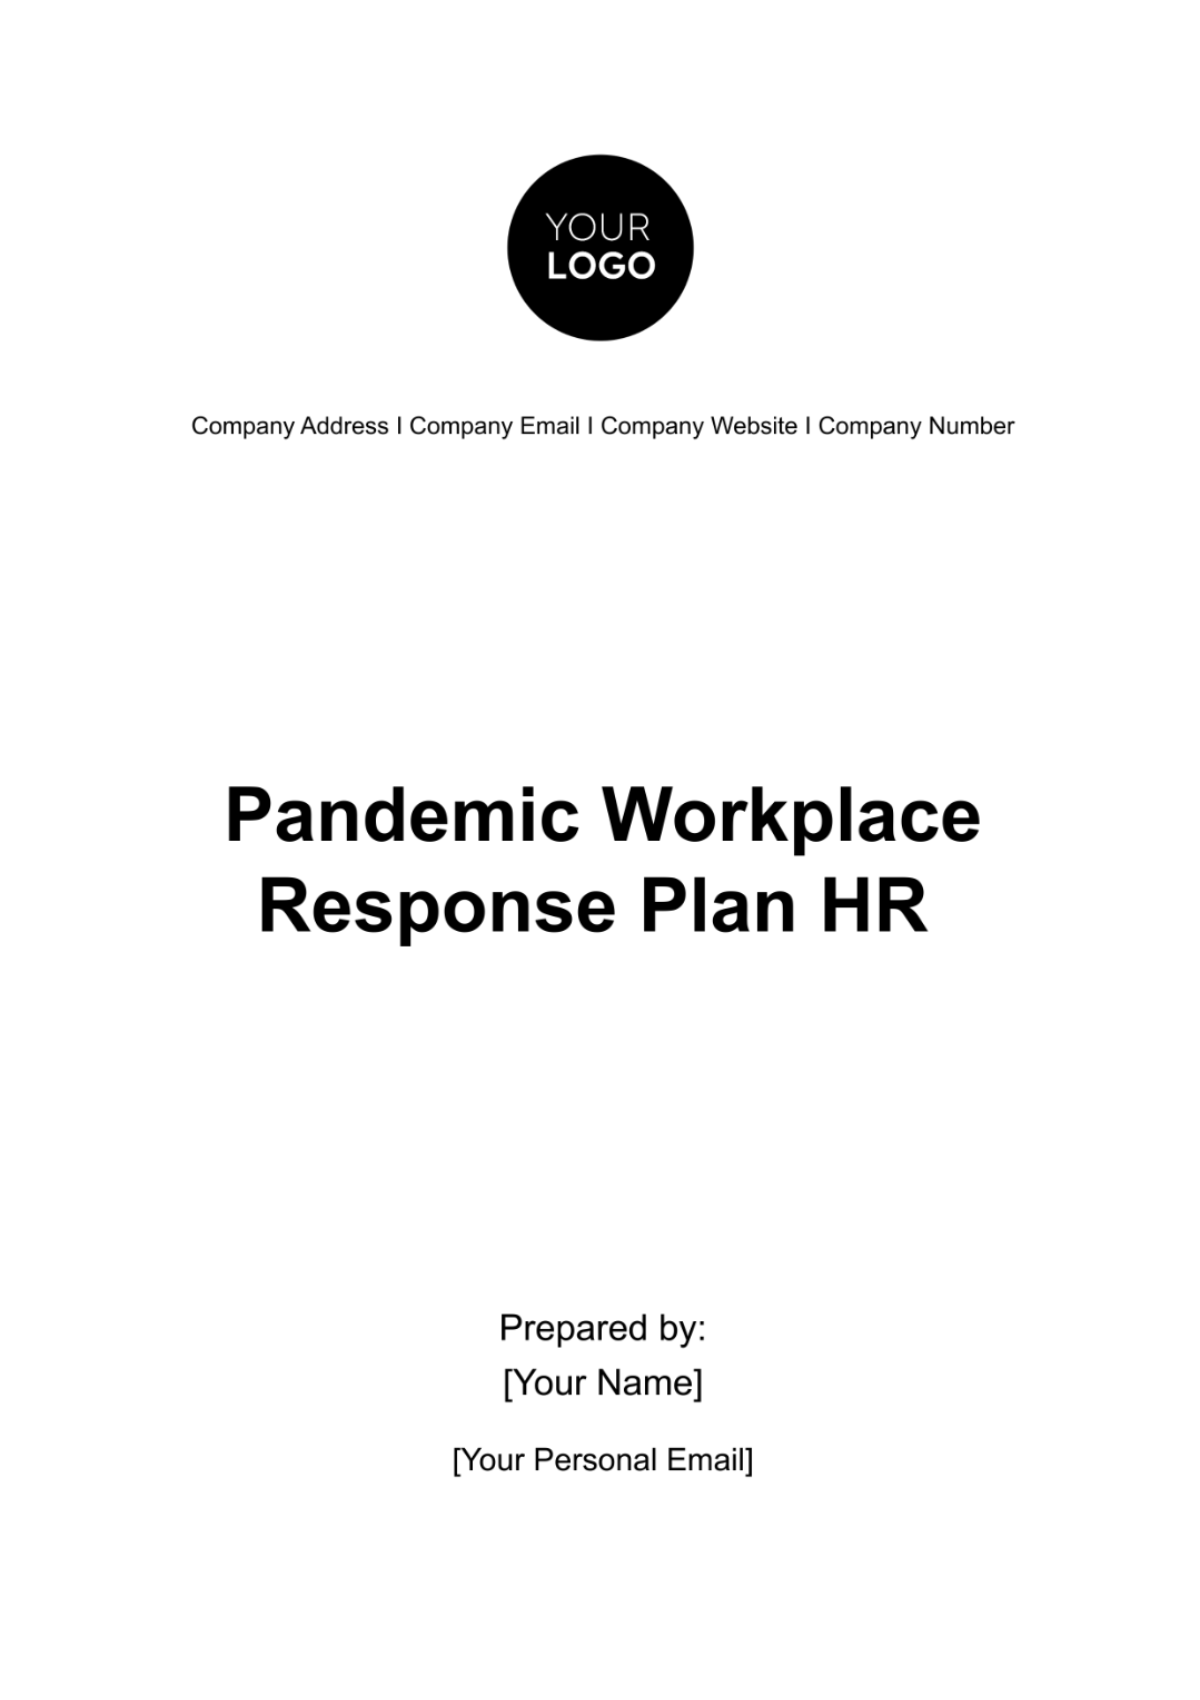 Free Pandemic Workplace Response Plan HR Template